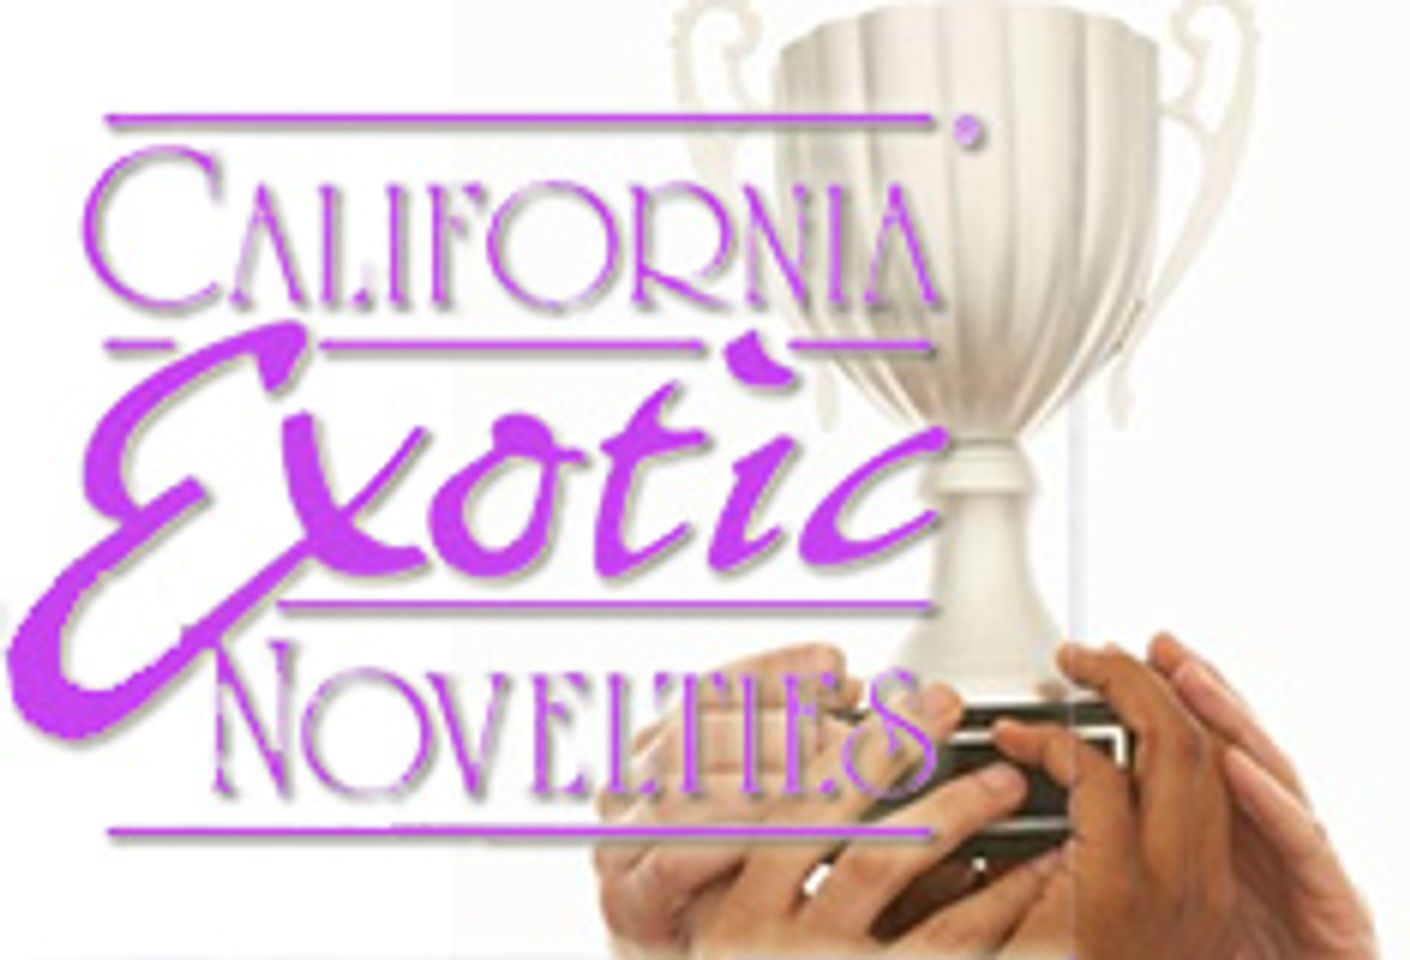 Cal Exotics Wins Lifetime Achievement Award